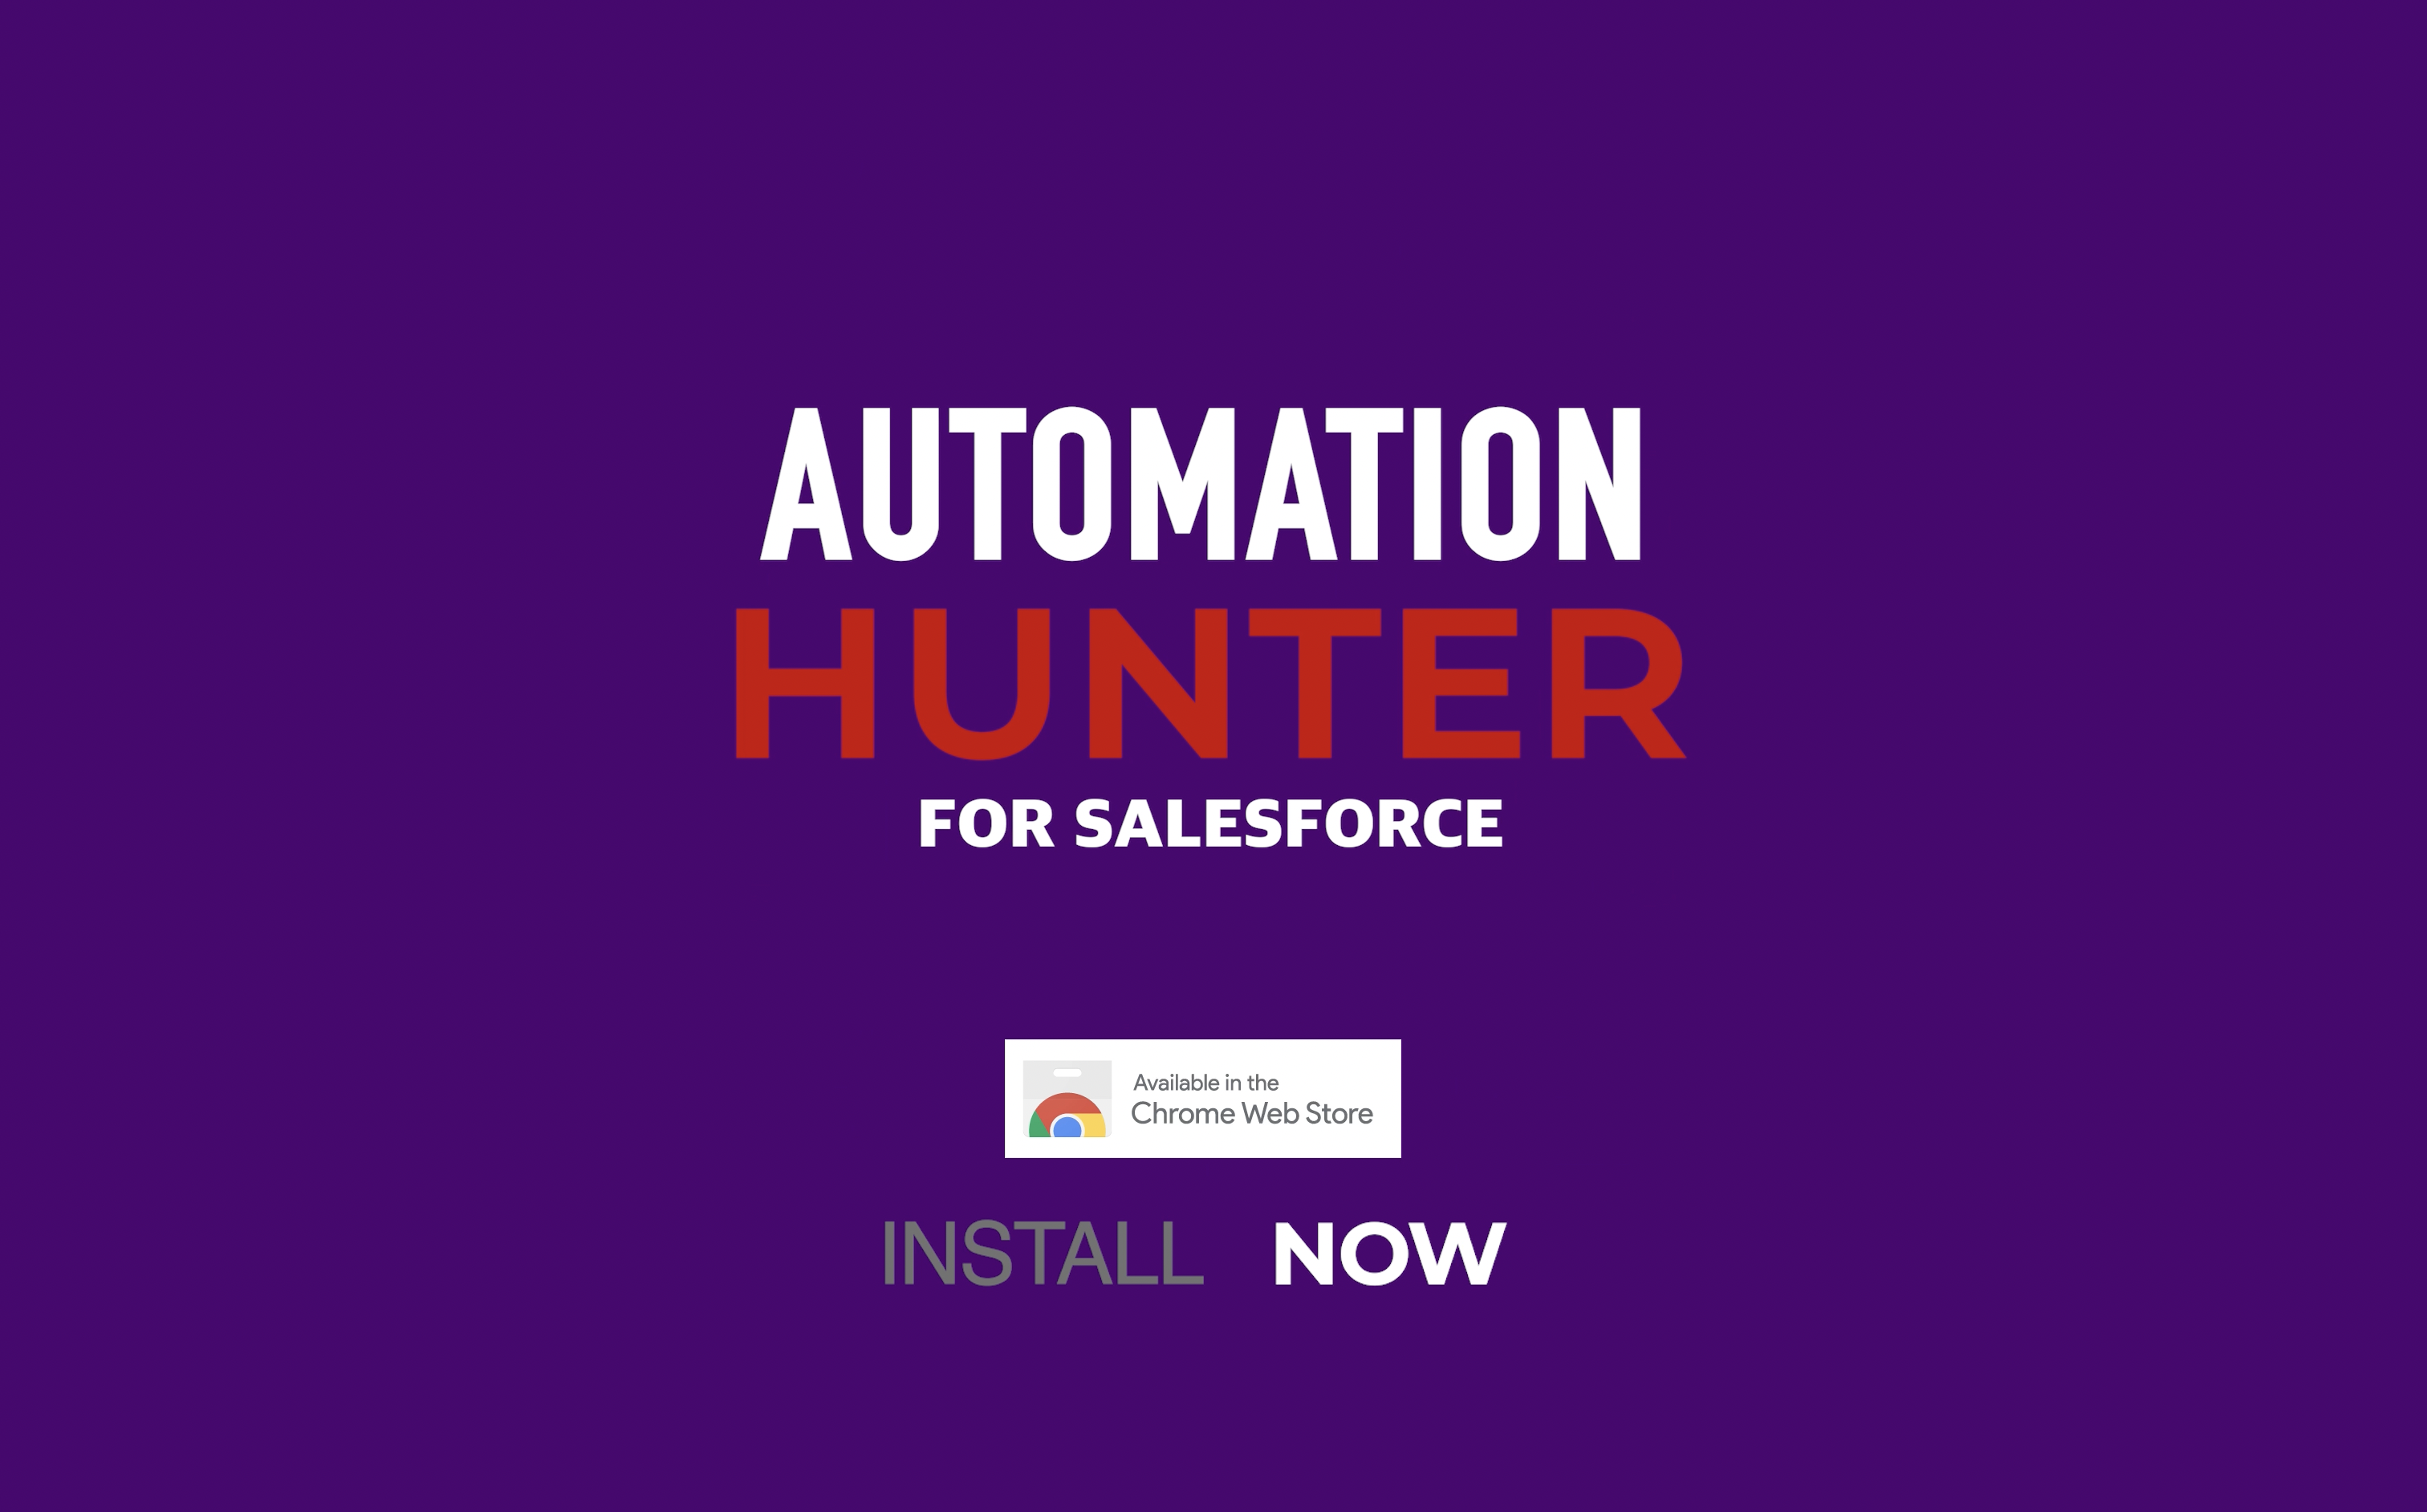 Automation Hunter For Salesforce by Ajinkya Dhas